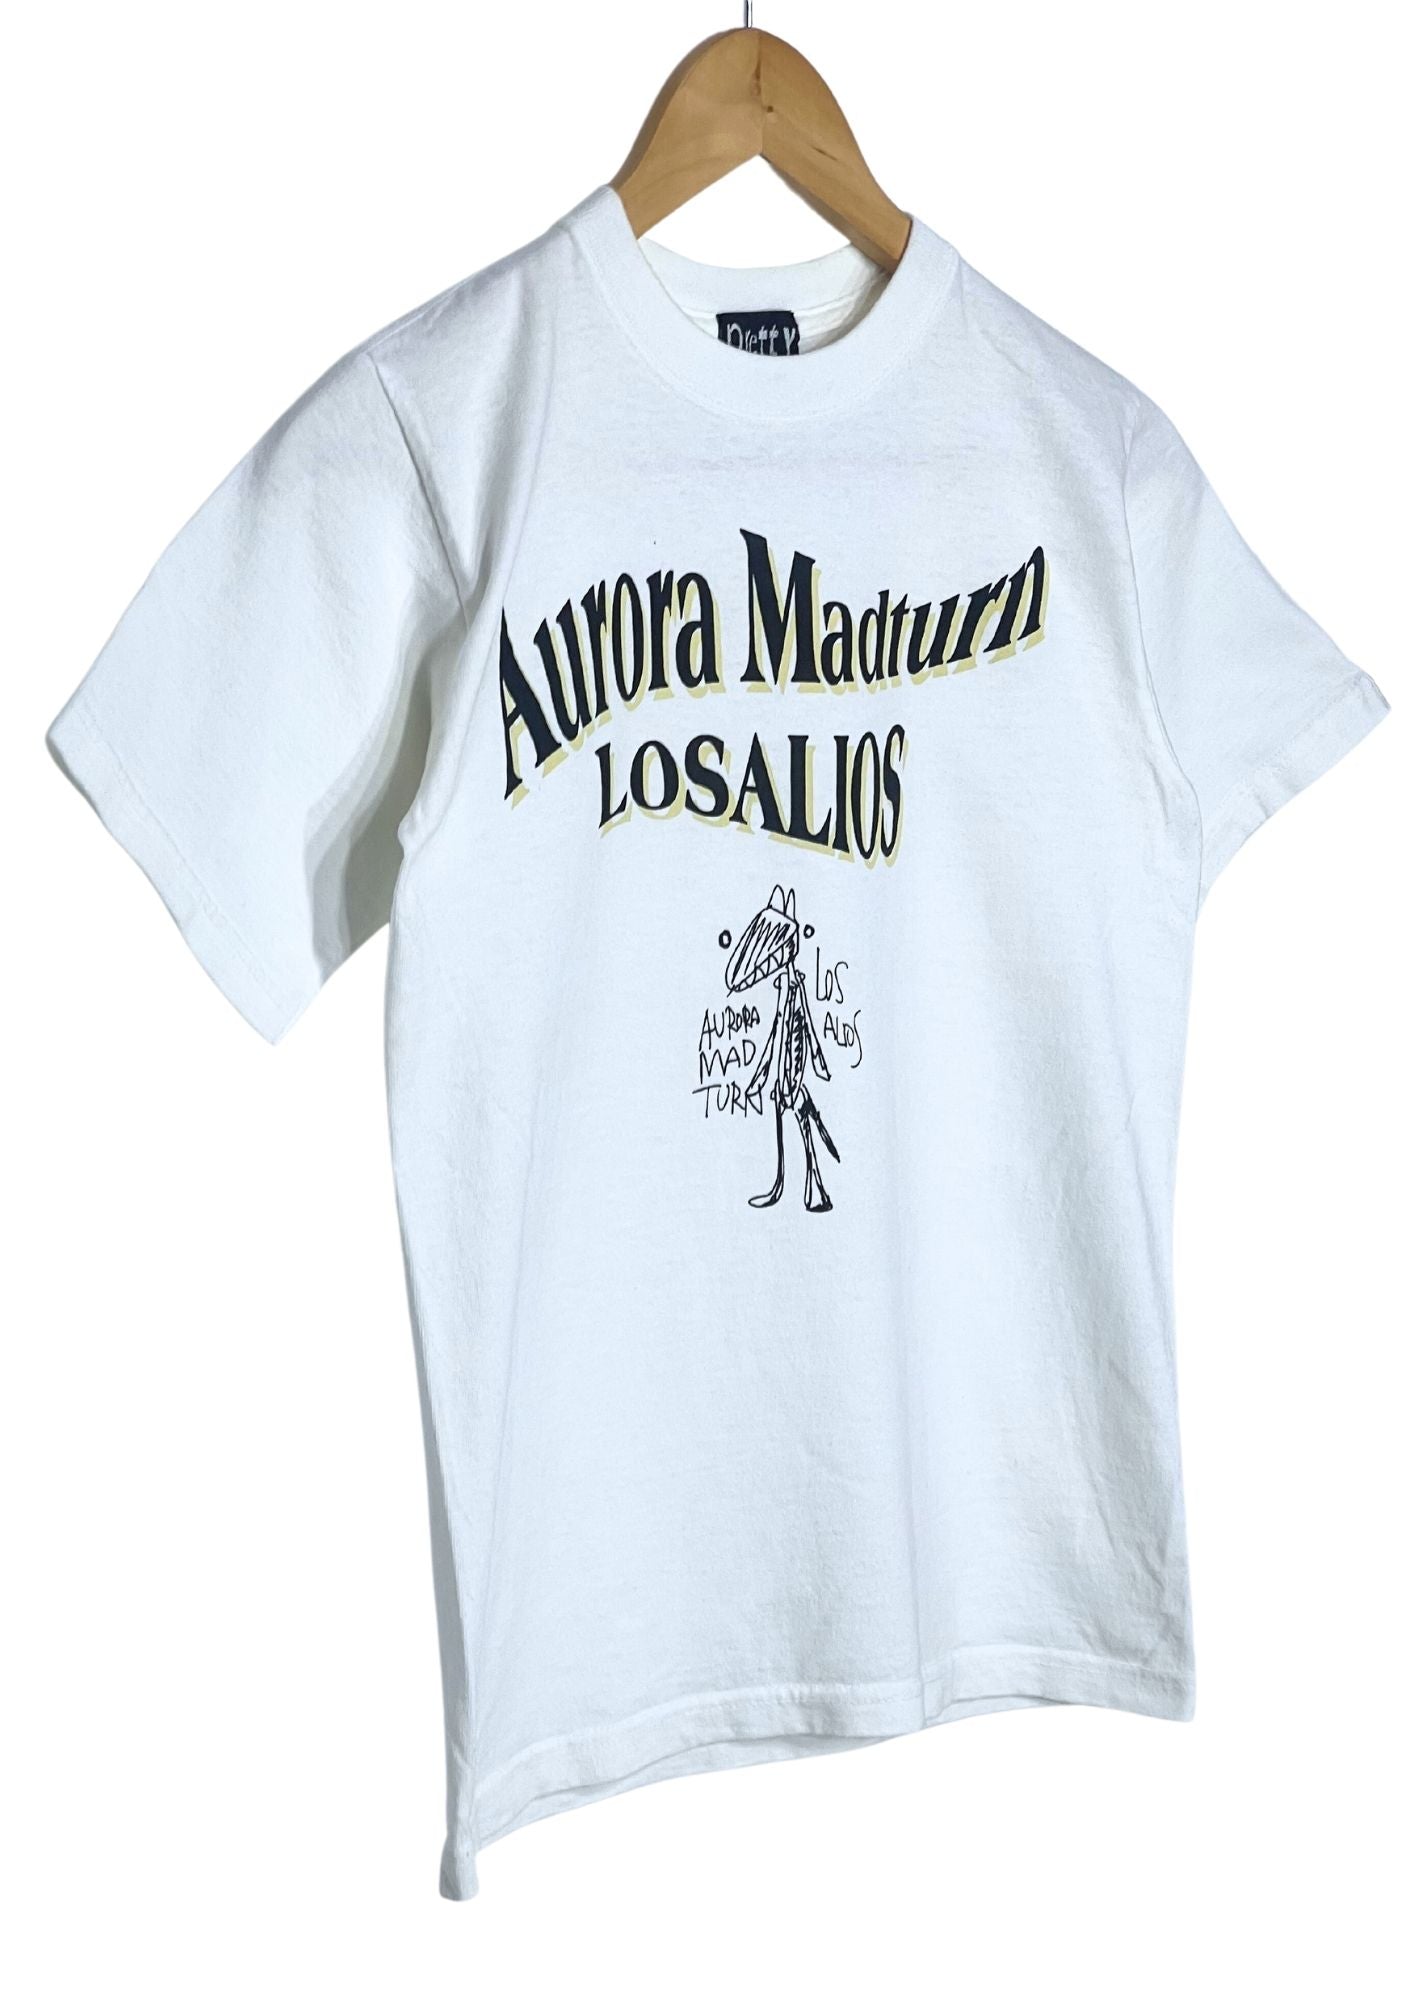 2000s LOSALIOS 'Aurora Madturn' Japanese Band T-shirt